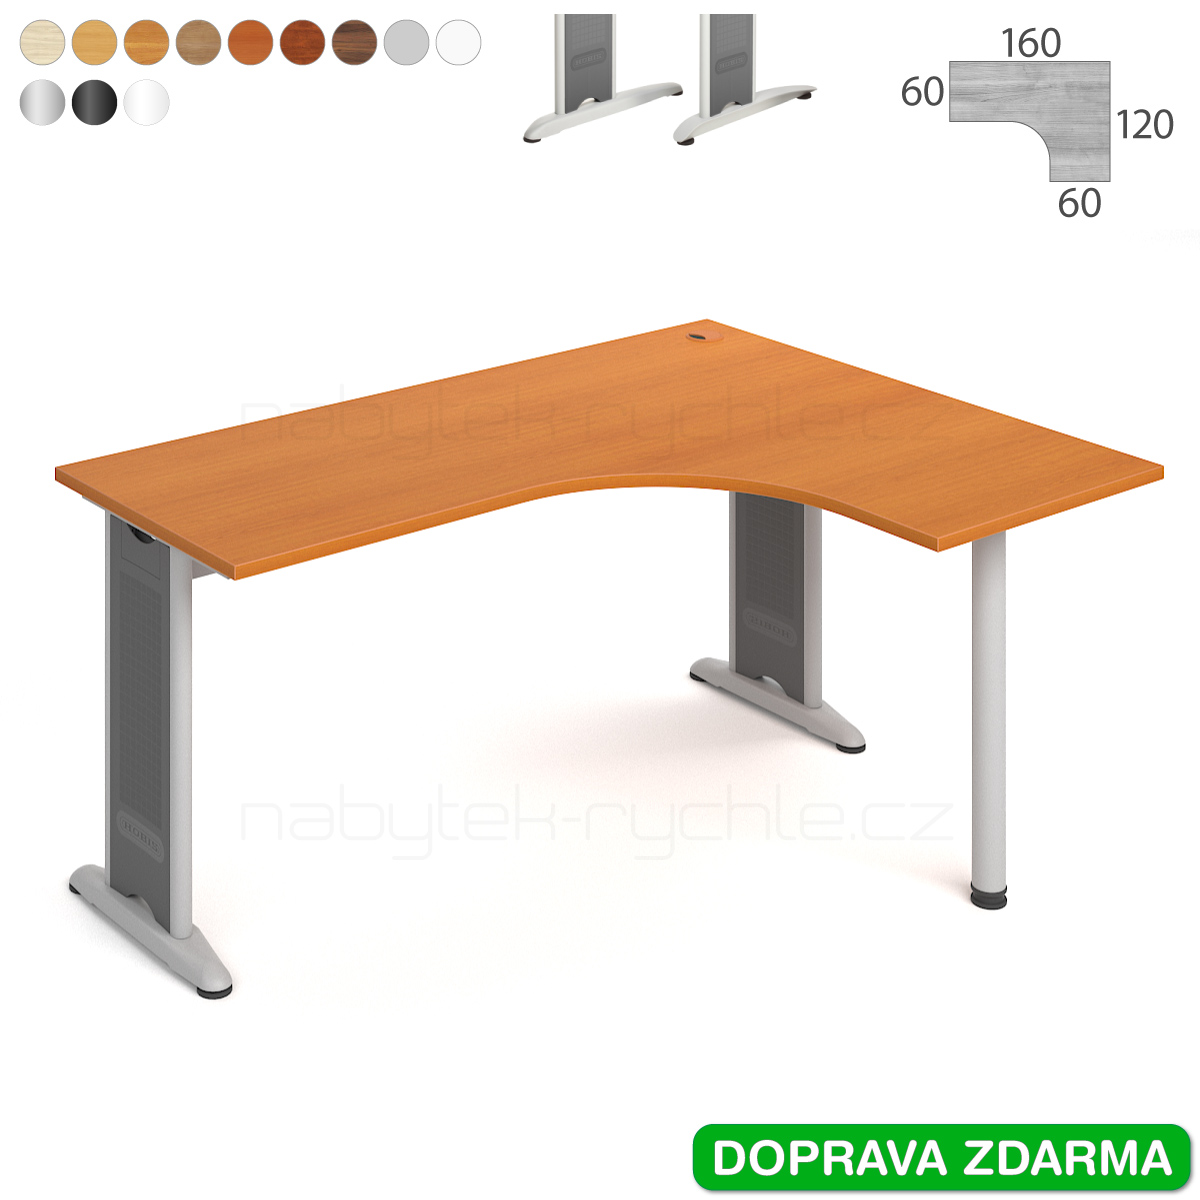 FE 60 L Hobis Flex - Stůl 160 x 120